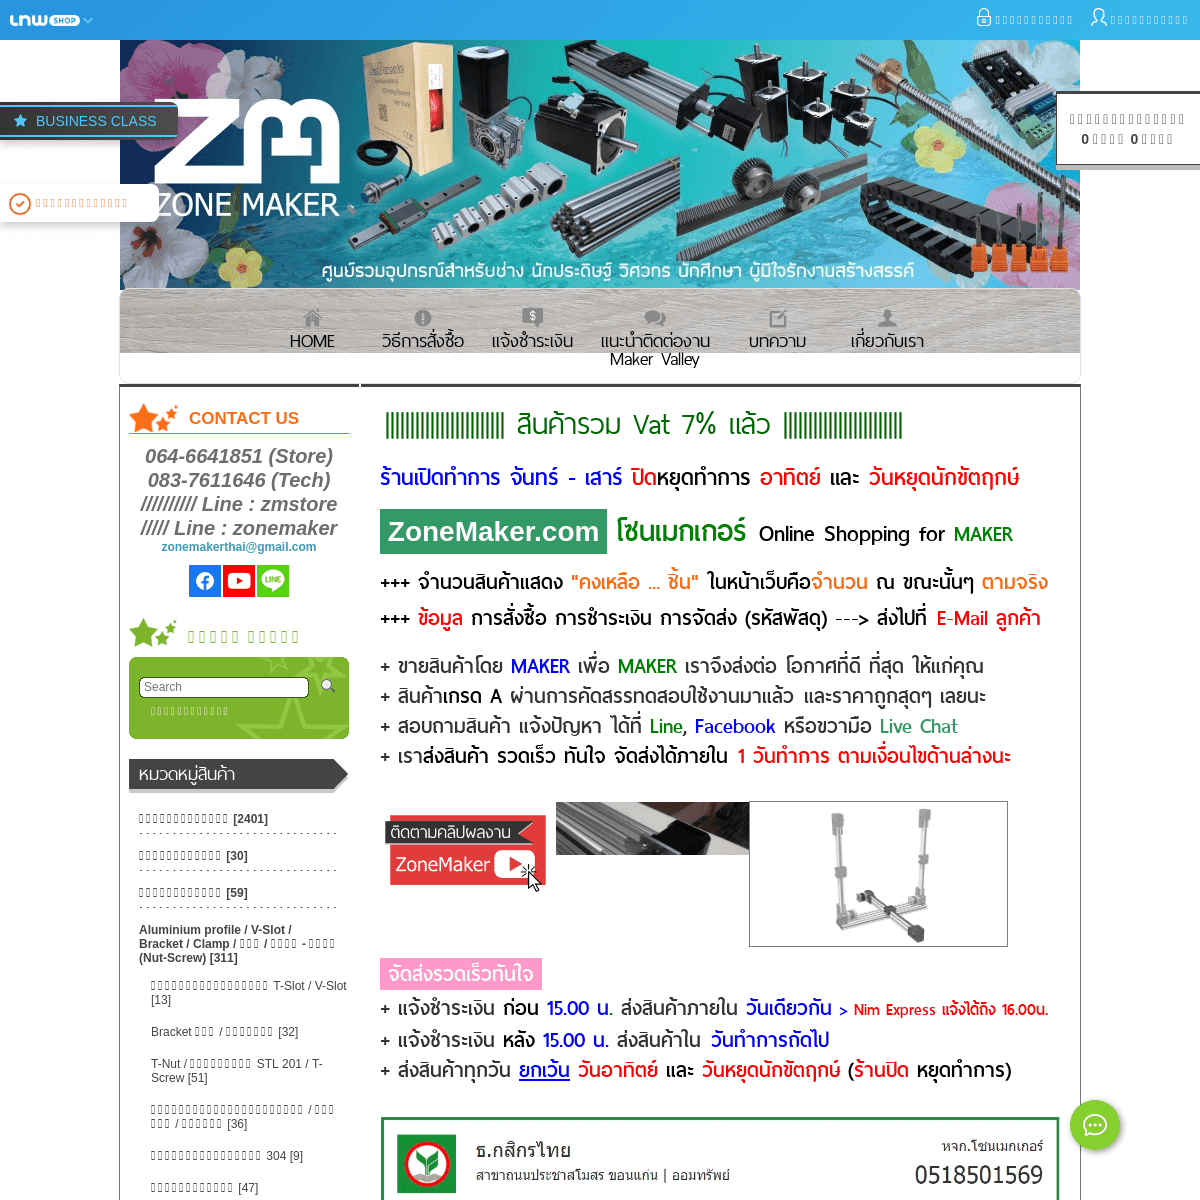 ZoneMaker | จำหน่ายอุปกรณ์ 3D Printer, CNC, หุ่นยนต์, Arduino, และเครื่องมืองาน Maker : Inspired by LnwShop.com